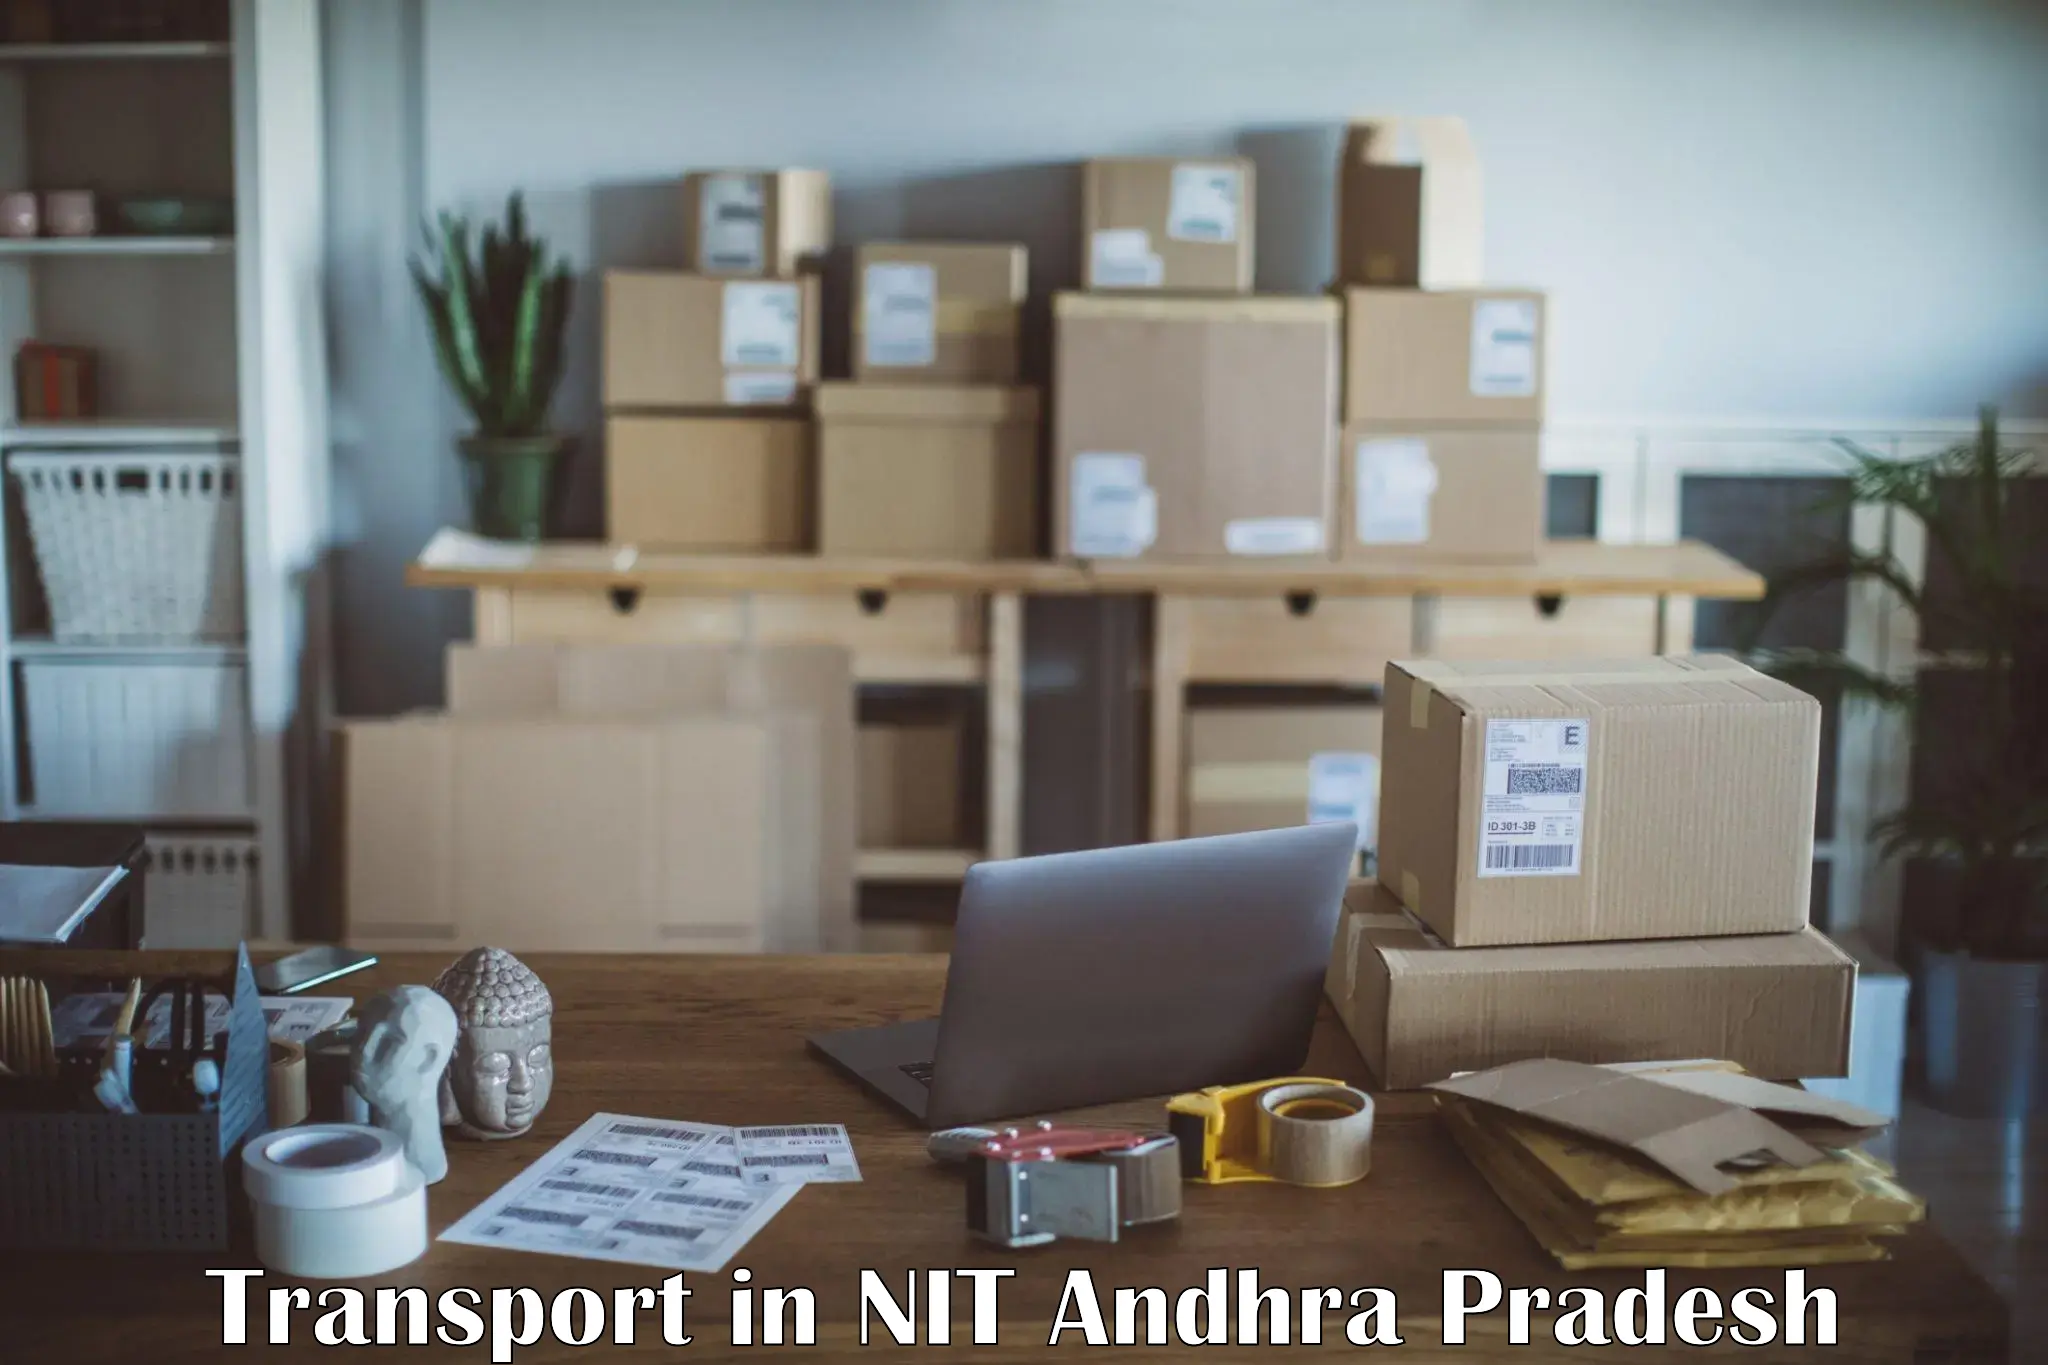 Cargo transport services in NIT Andhra Pradesh